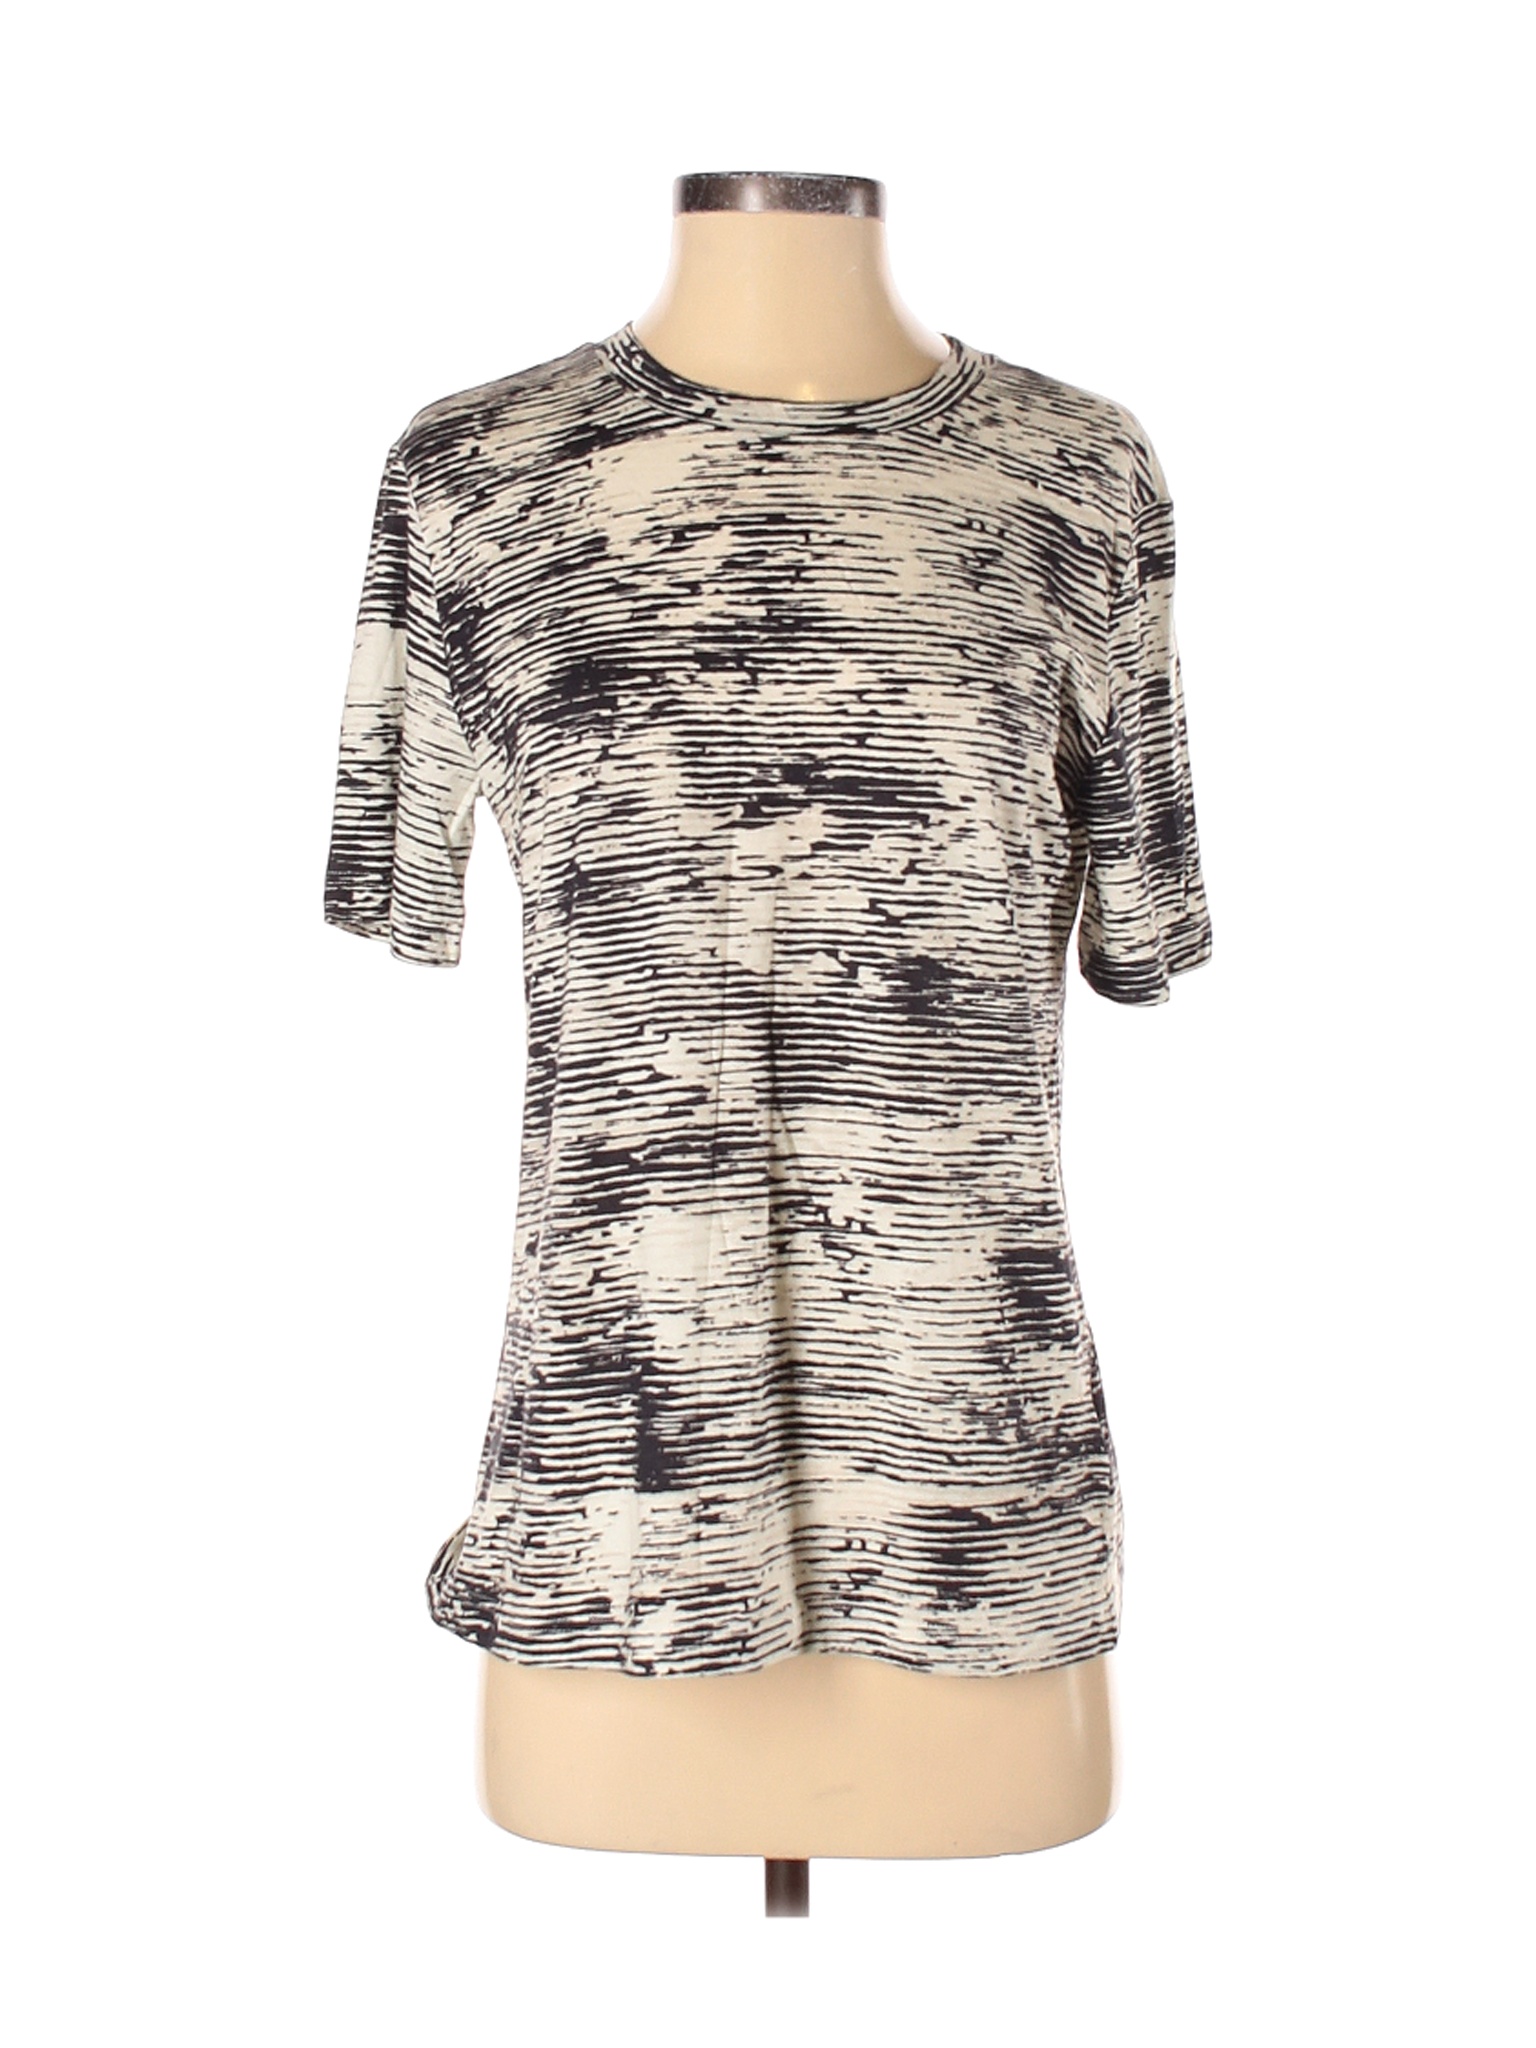 Jason Wu Women Ivory Short Sleeve T-Shirt XS | eBay